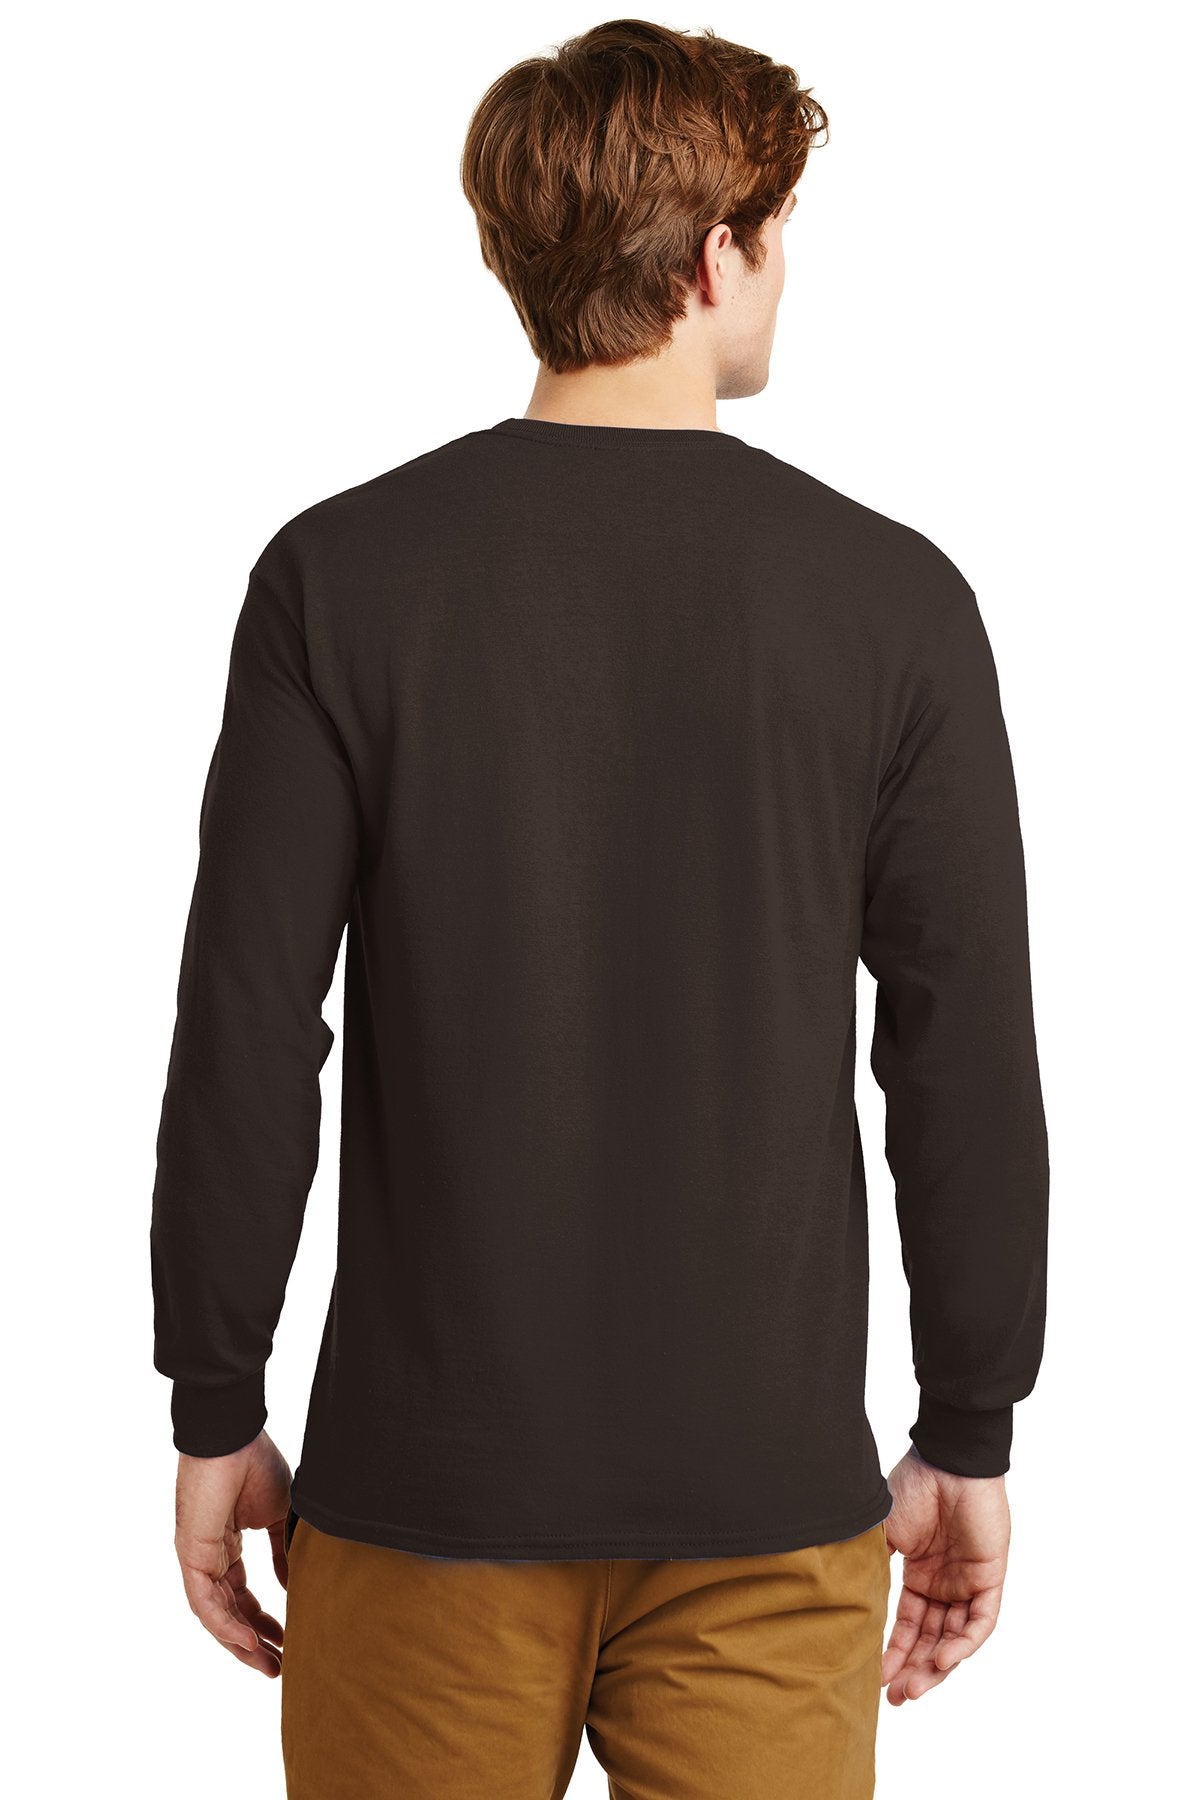 gildan ultra cotton long sleeve t shirt g2400 dark chocolate